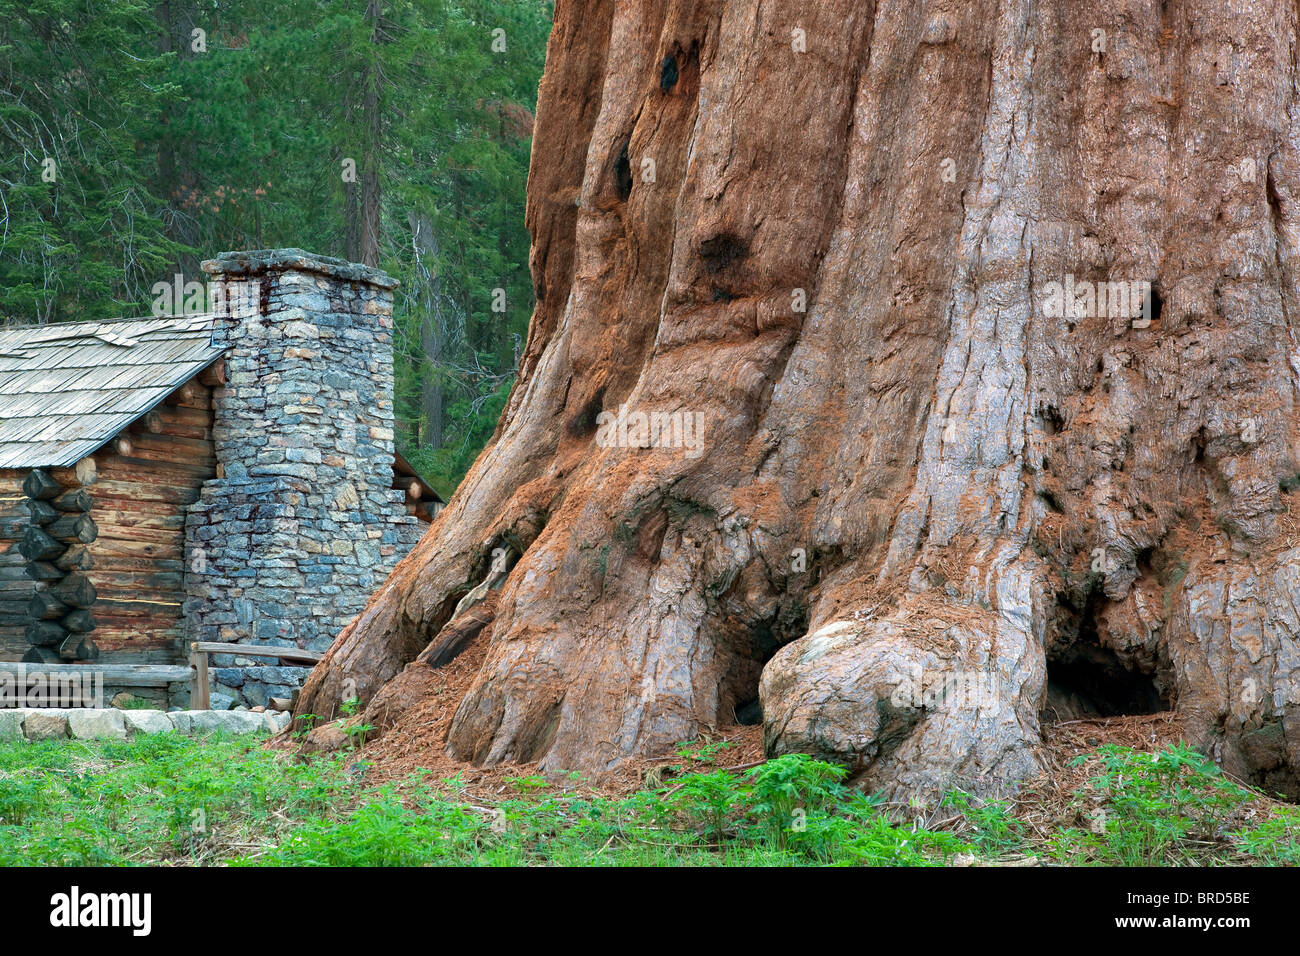 Mariposa Grove Museum with giant Sequoia Redwood trees. Yosemite National Park, California Stock Photo